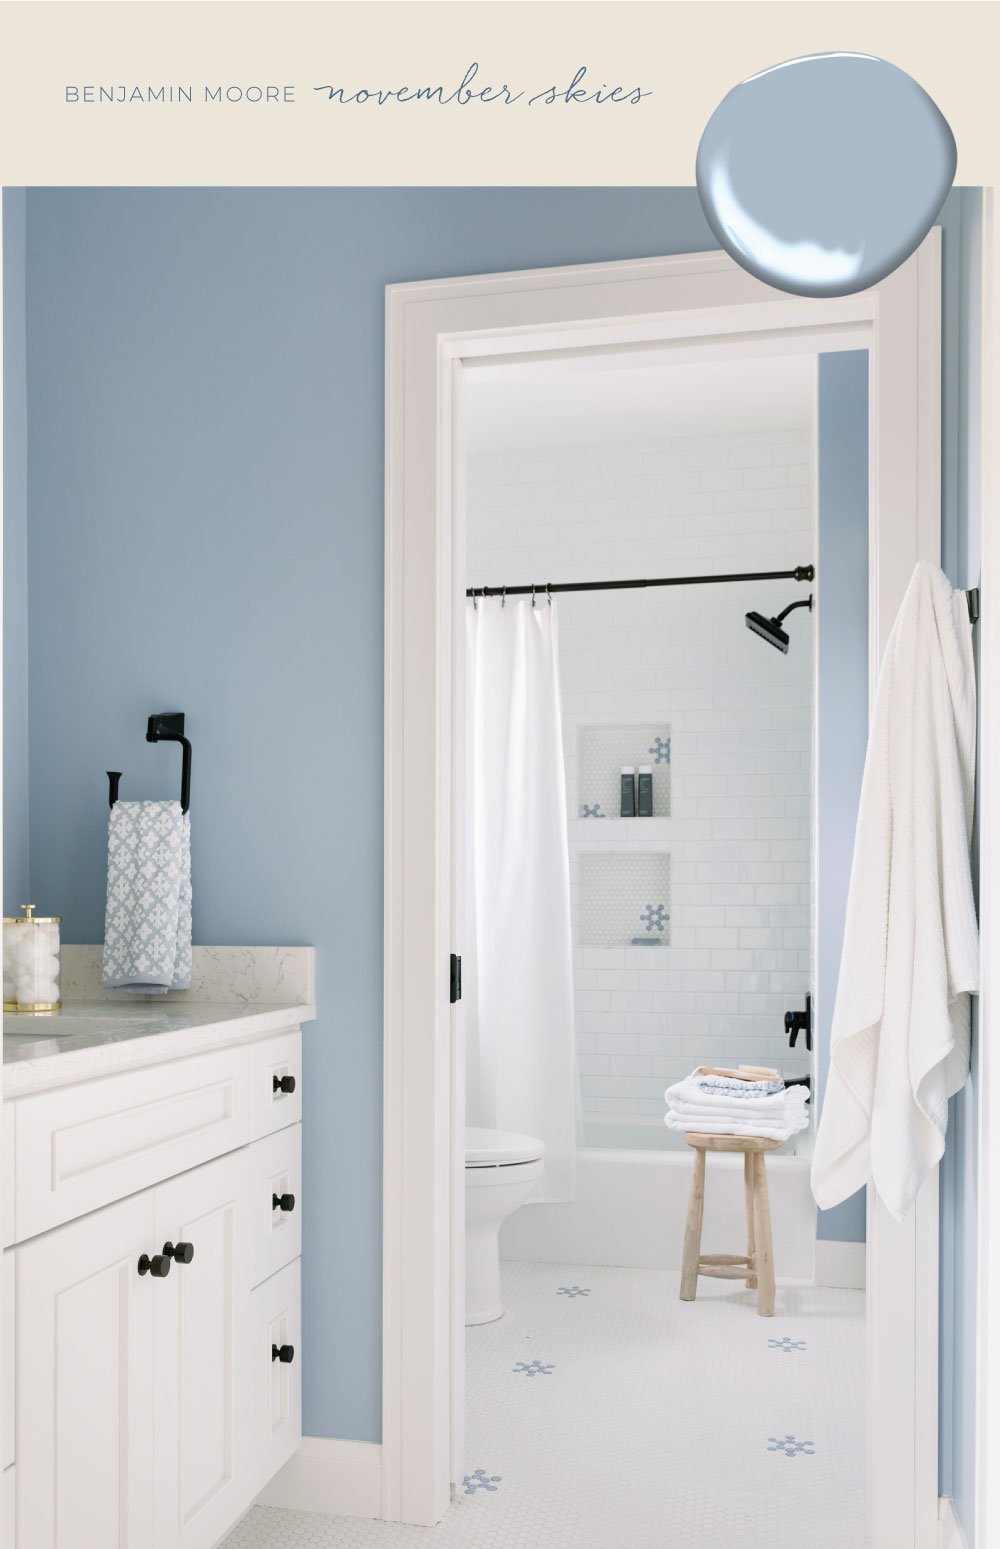 Bathroom with crisp white trim and white vanity and walls painted Benjamin Moore November Skies